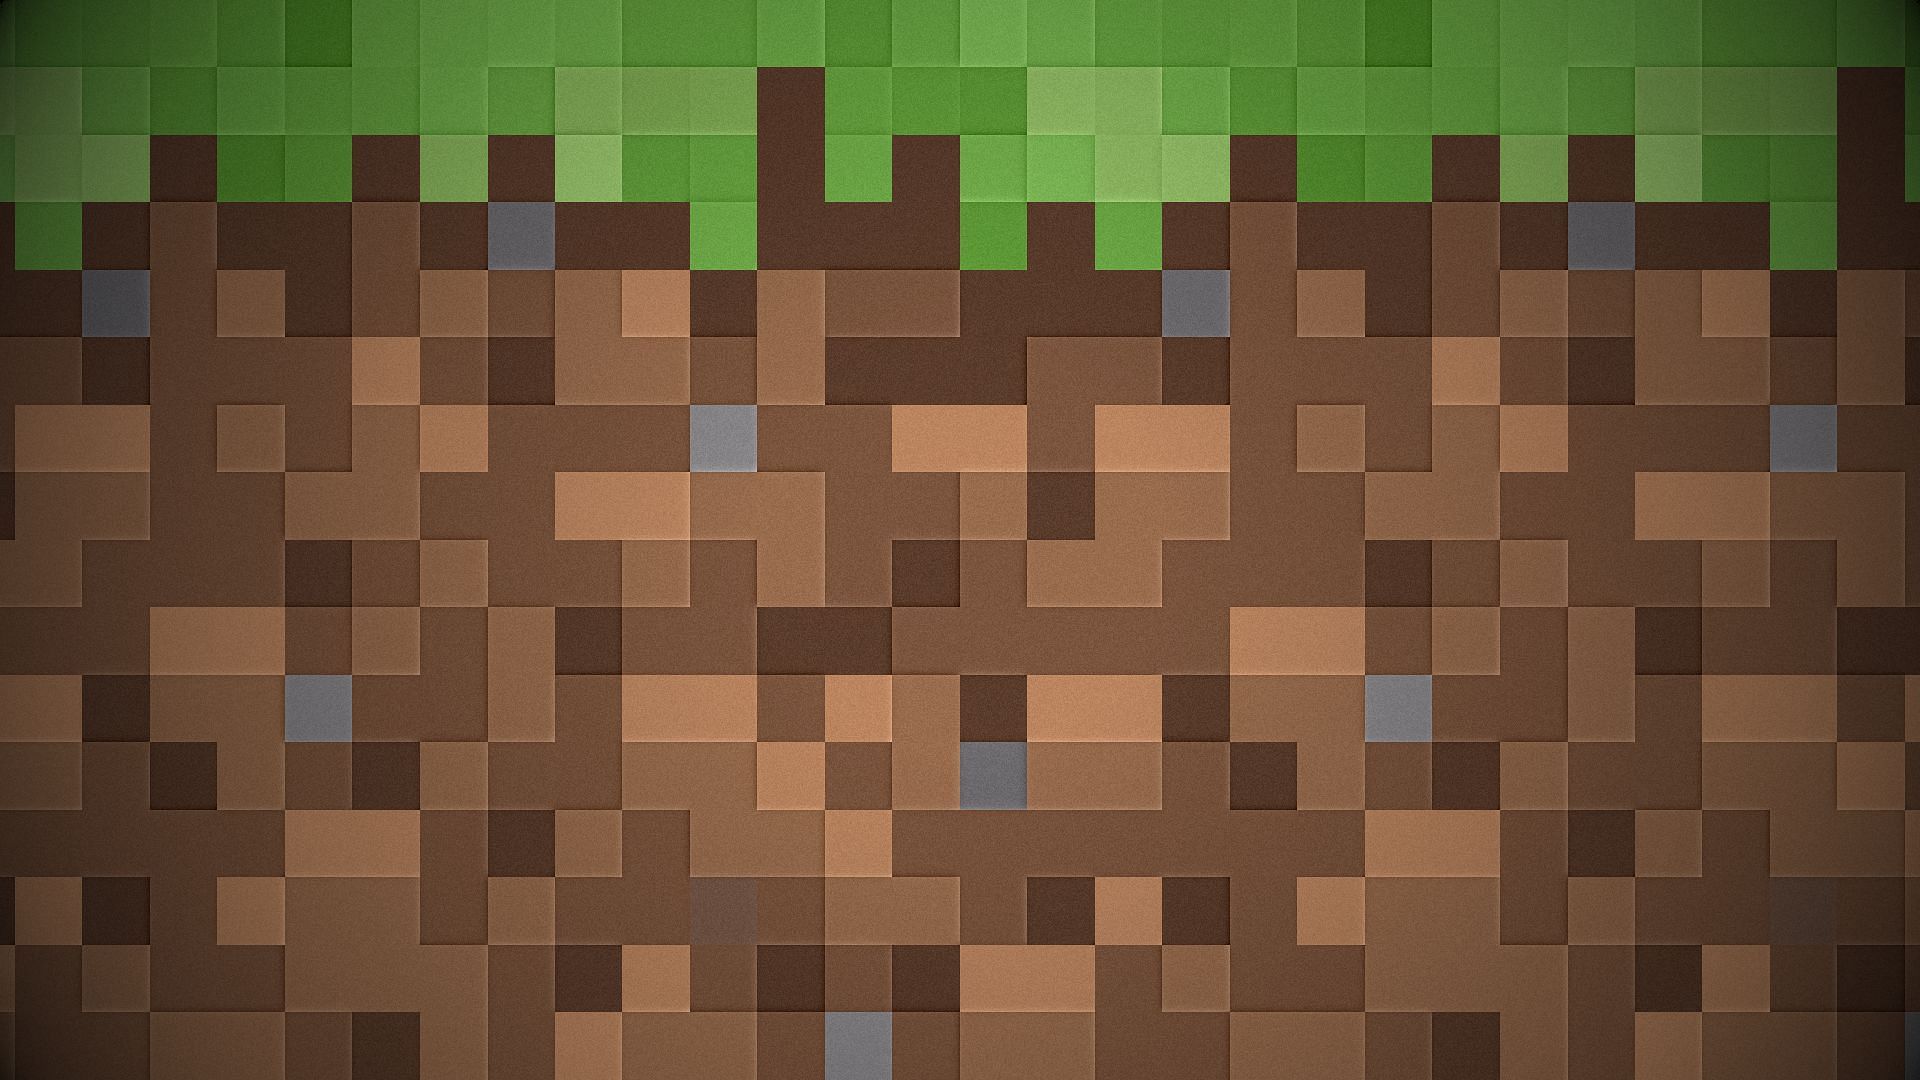 A grass block in Minecraft (Image via WallapaperAccess/Minecraft)